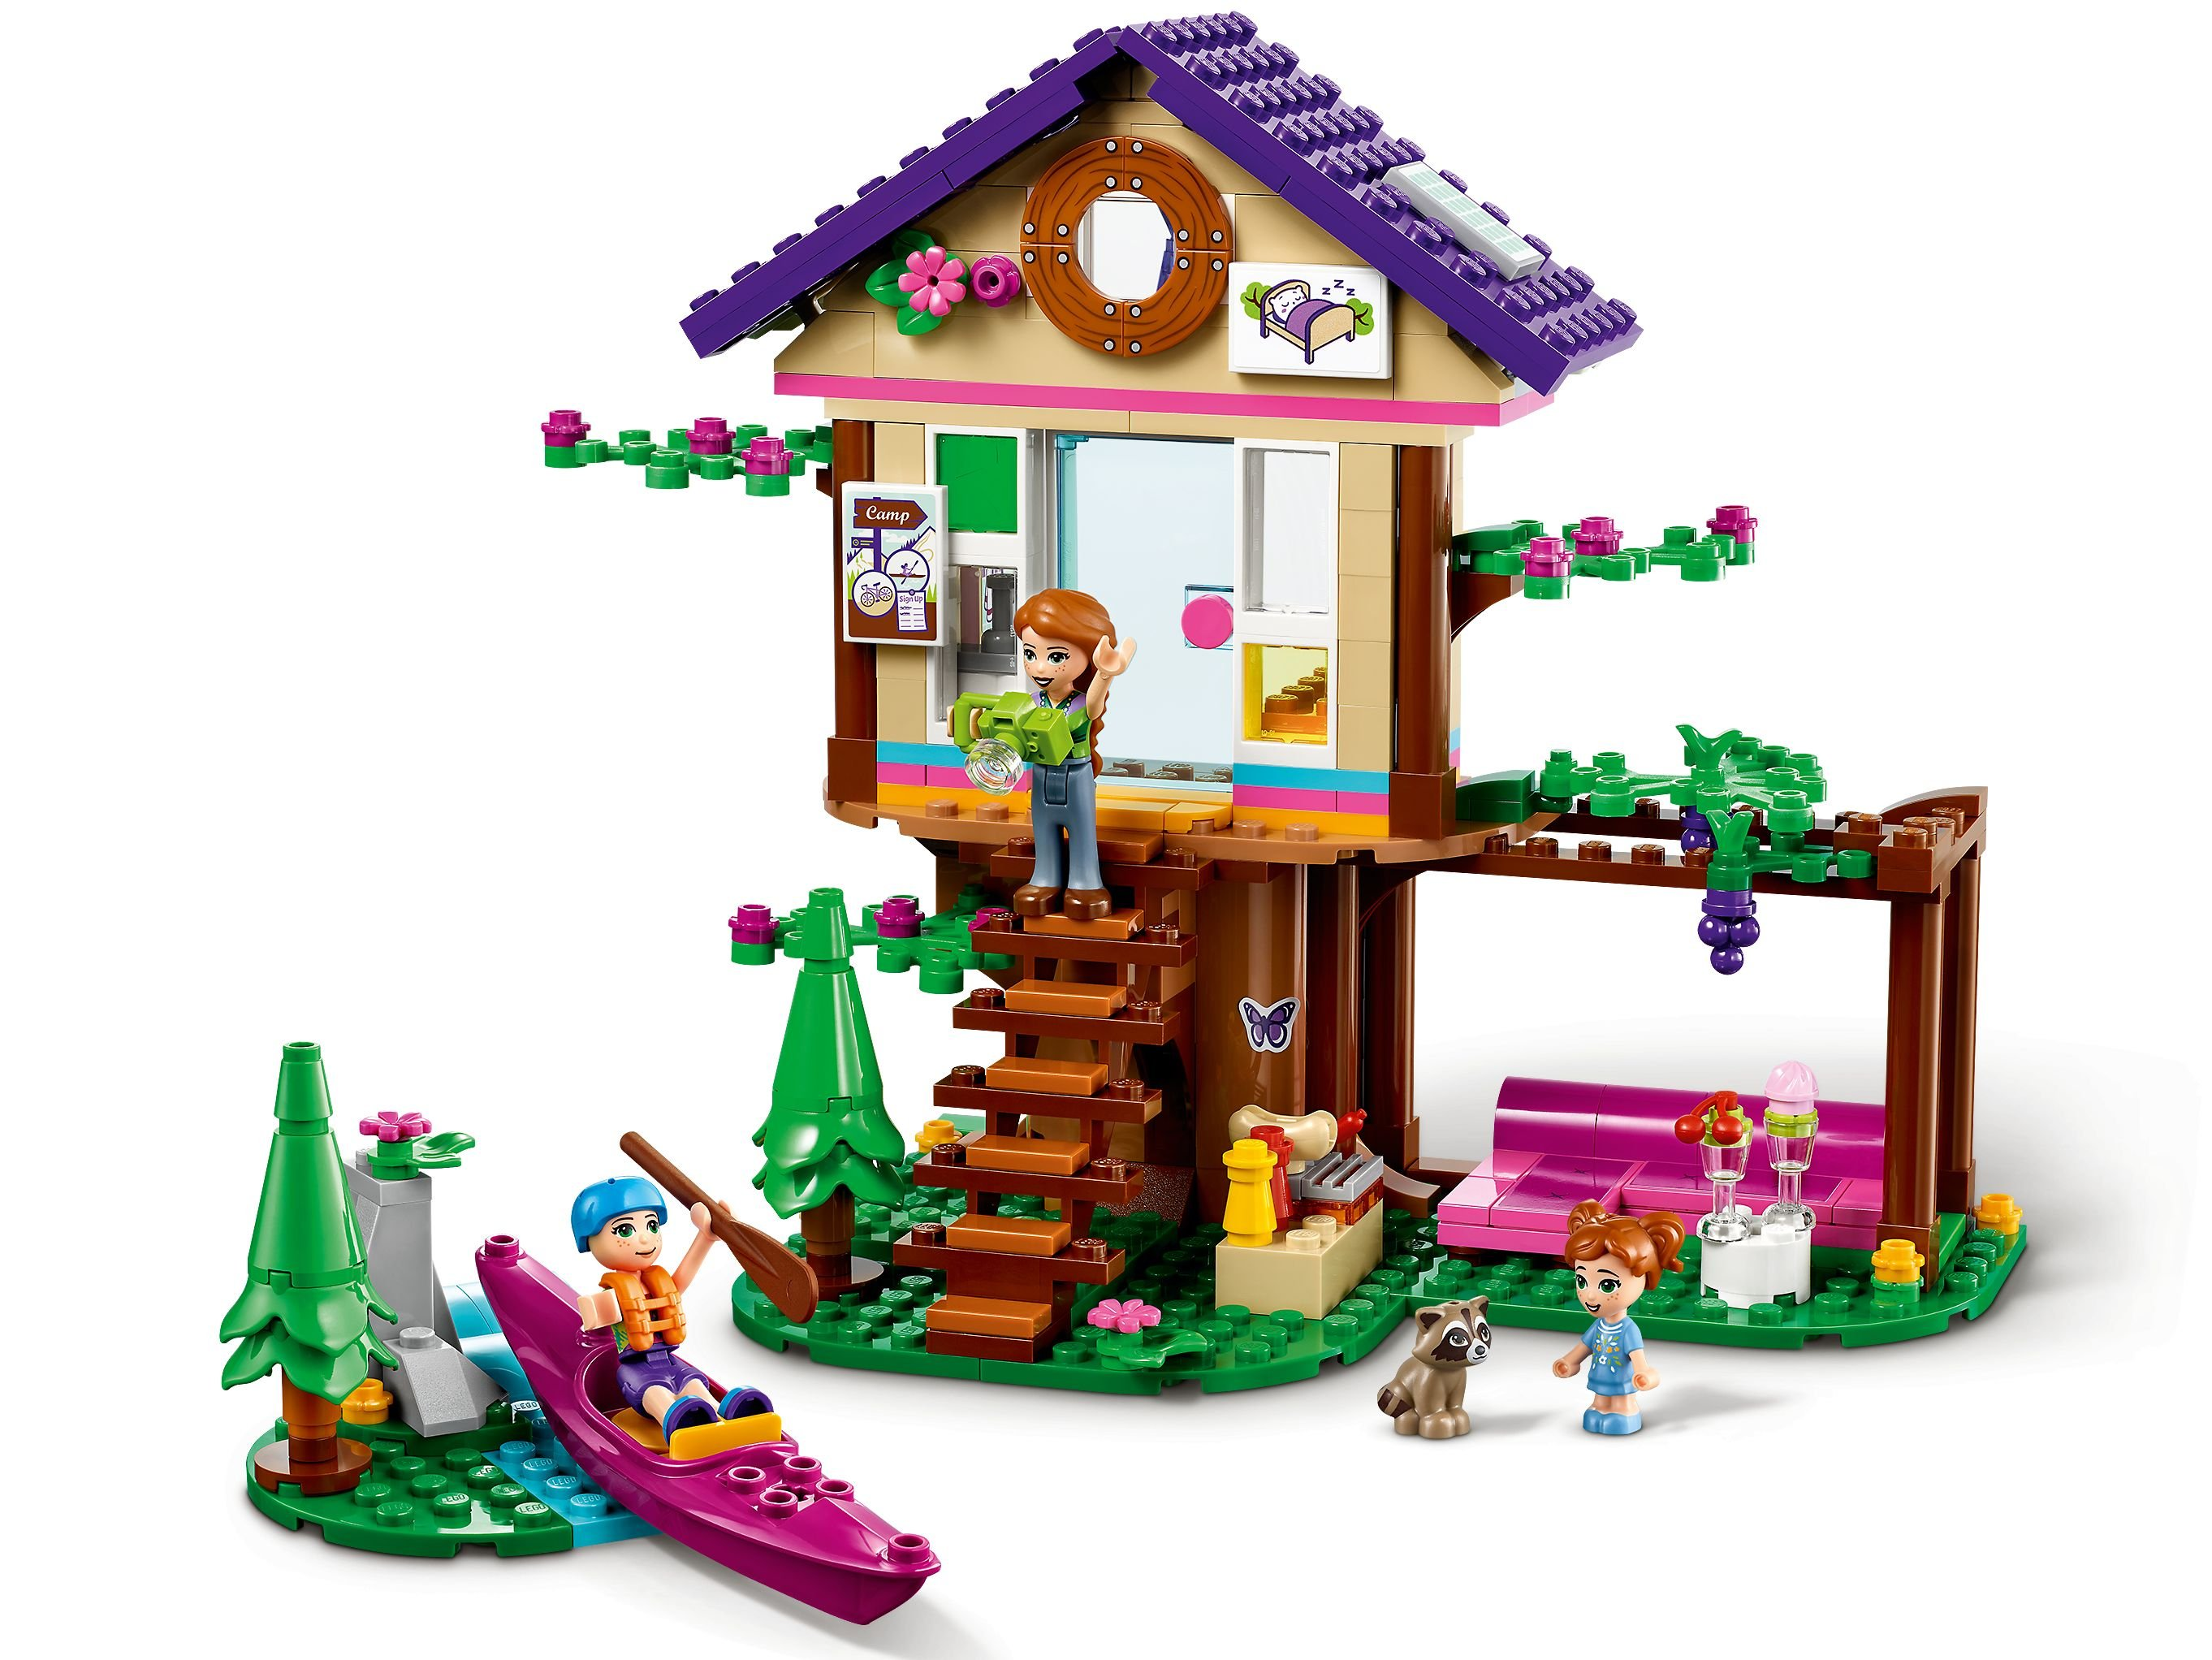 LEGO WALD Bausatz, Mehrfarbig IM BAUMHAUS 41679